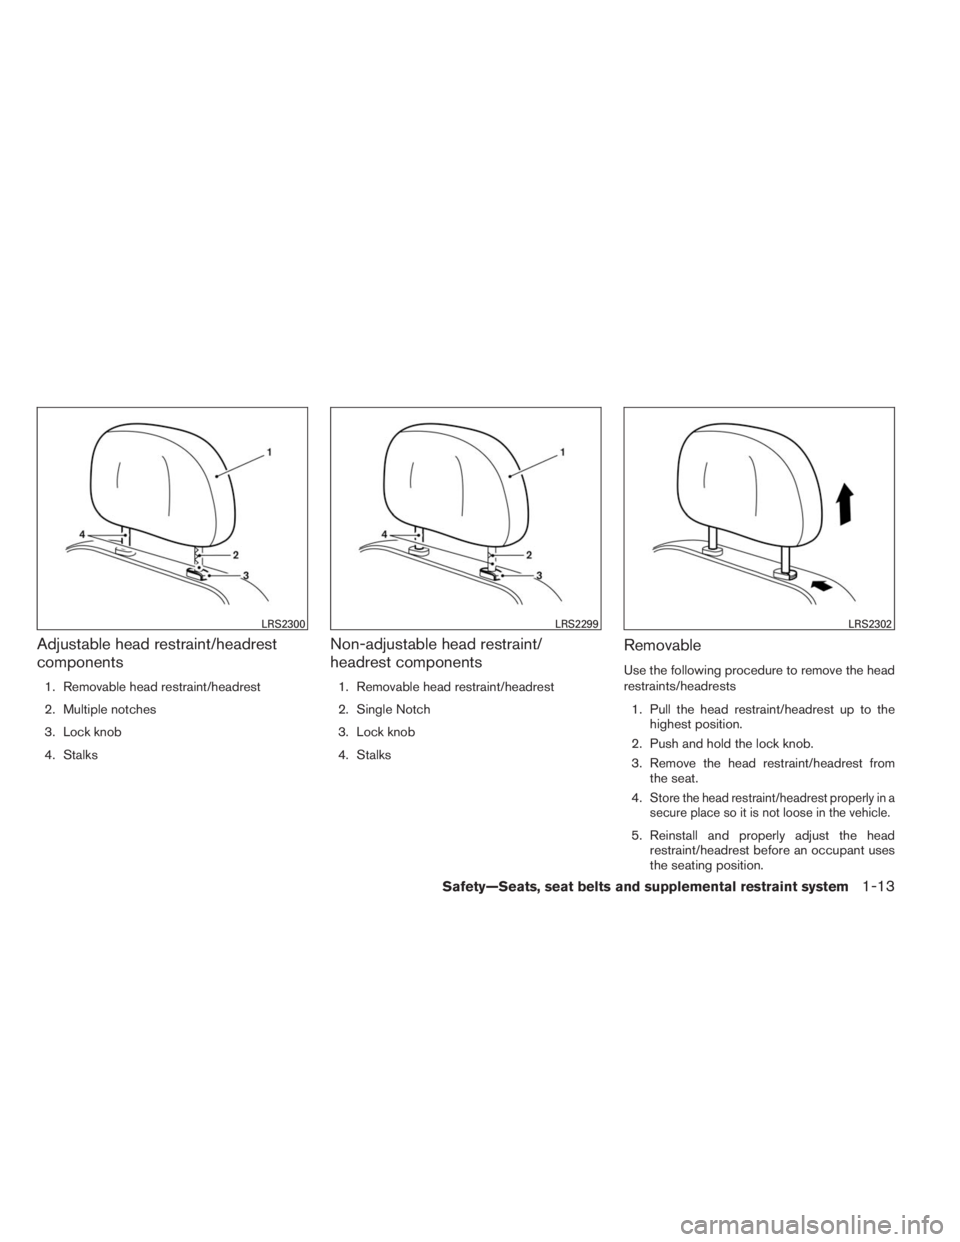 INFINITI QX60 2014 User Guide Adjustable head restraint/headrest
components
1. Removable head restraint/headrest
2. Multiple notches
3. Lock knob
4. Stalks
Non-adjustable head restraint/
headrest components
1. Removable head restr